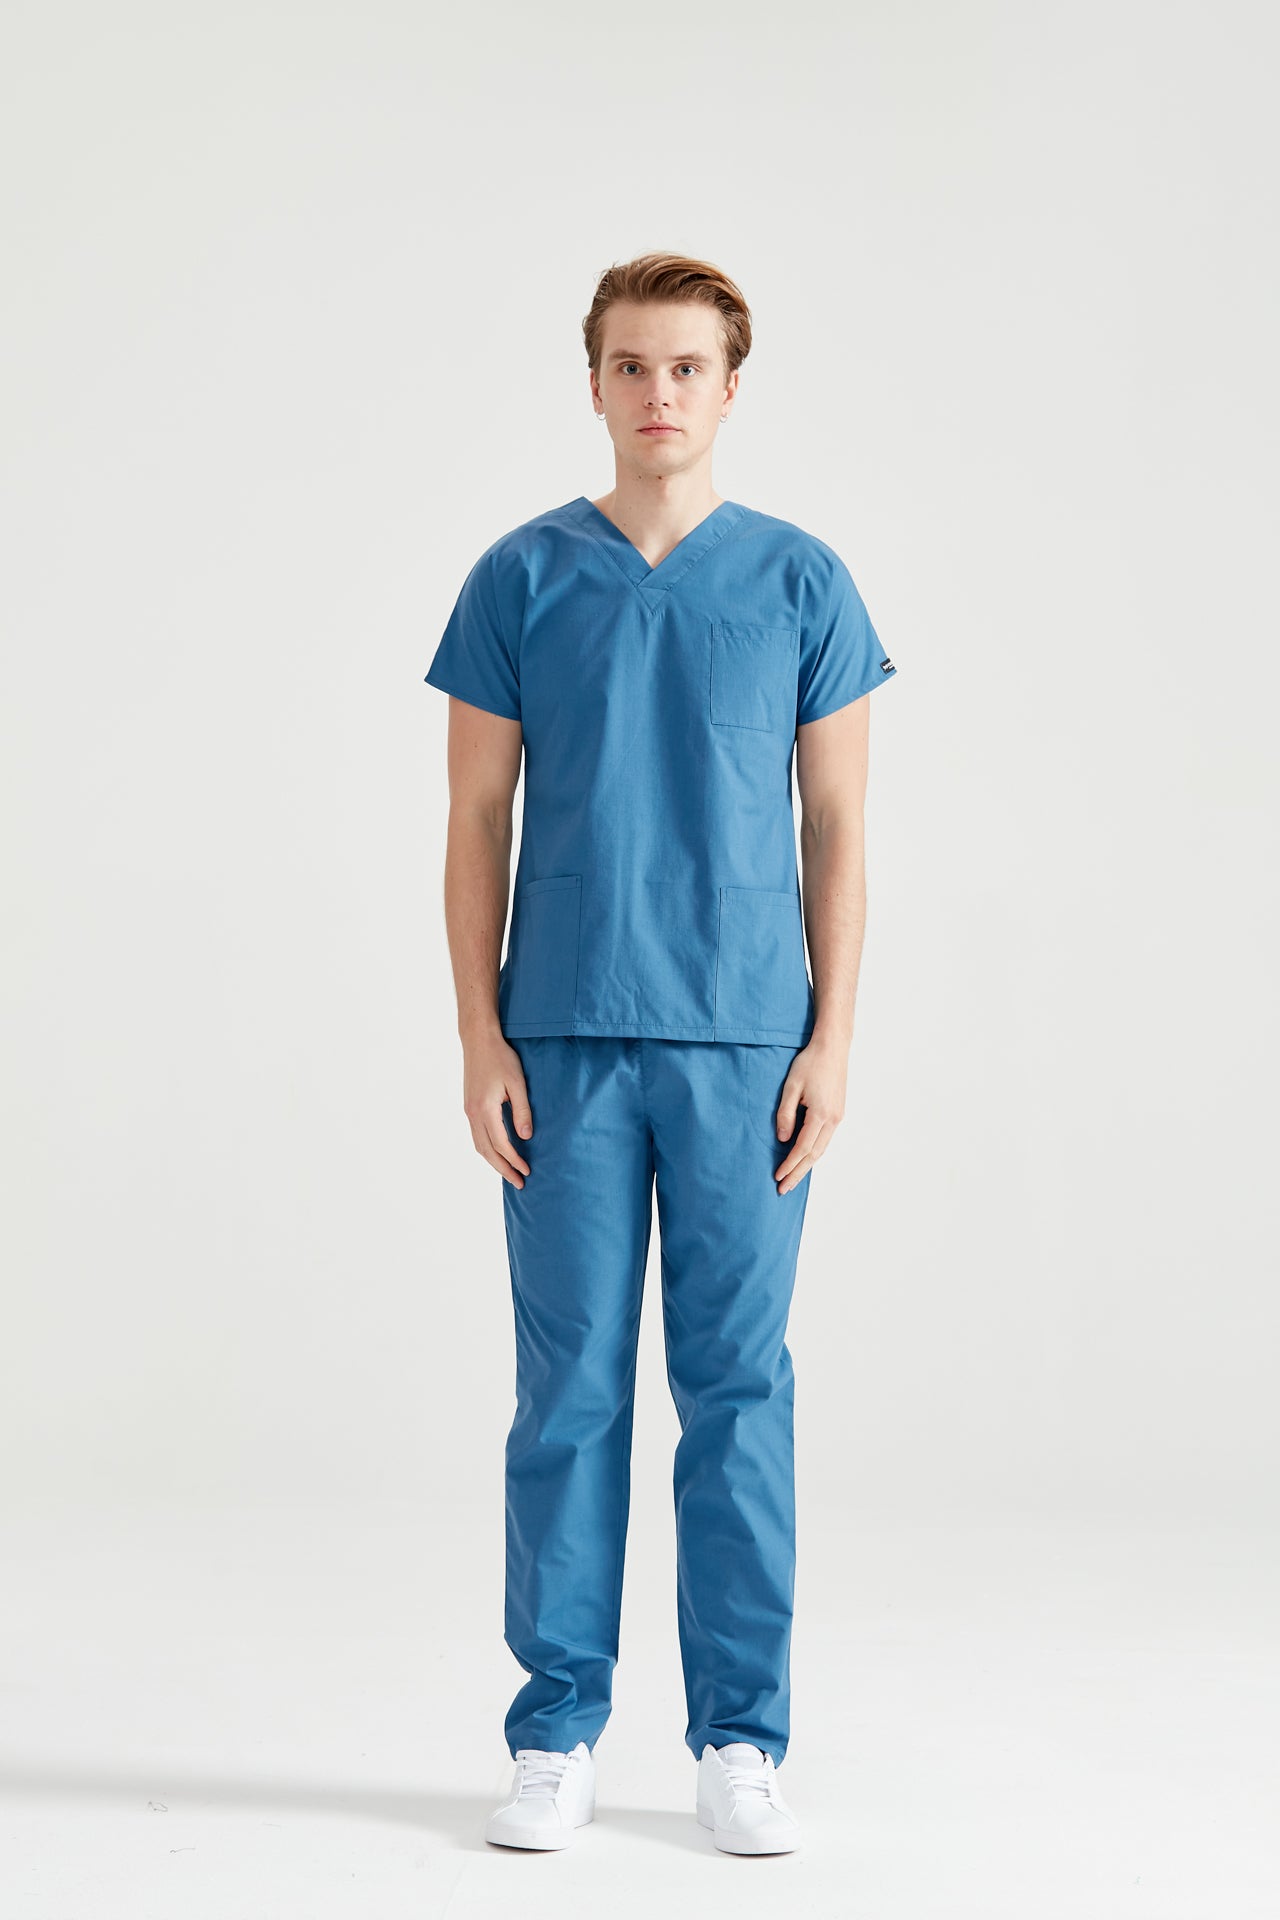 Asistent medical imbracat in costum medical albastru Petrol, pentru barbati, vedere din picioare